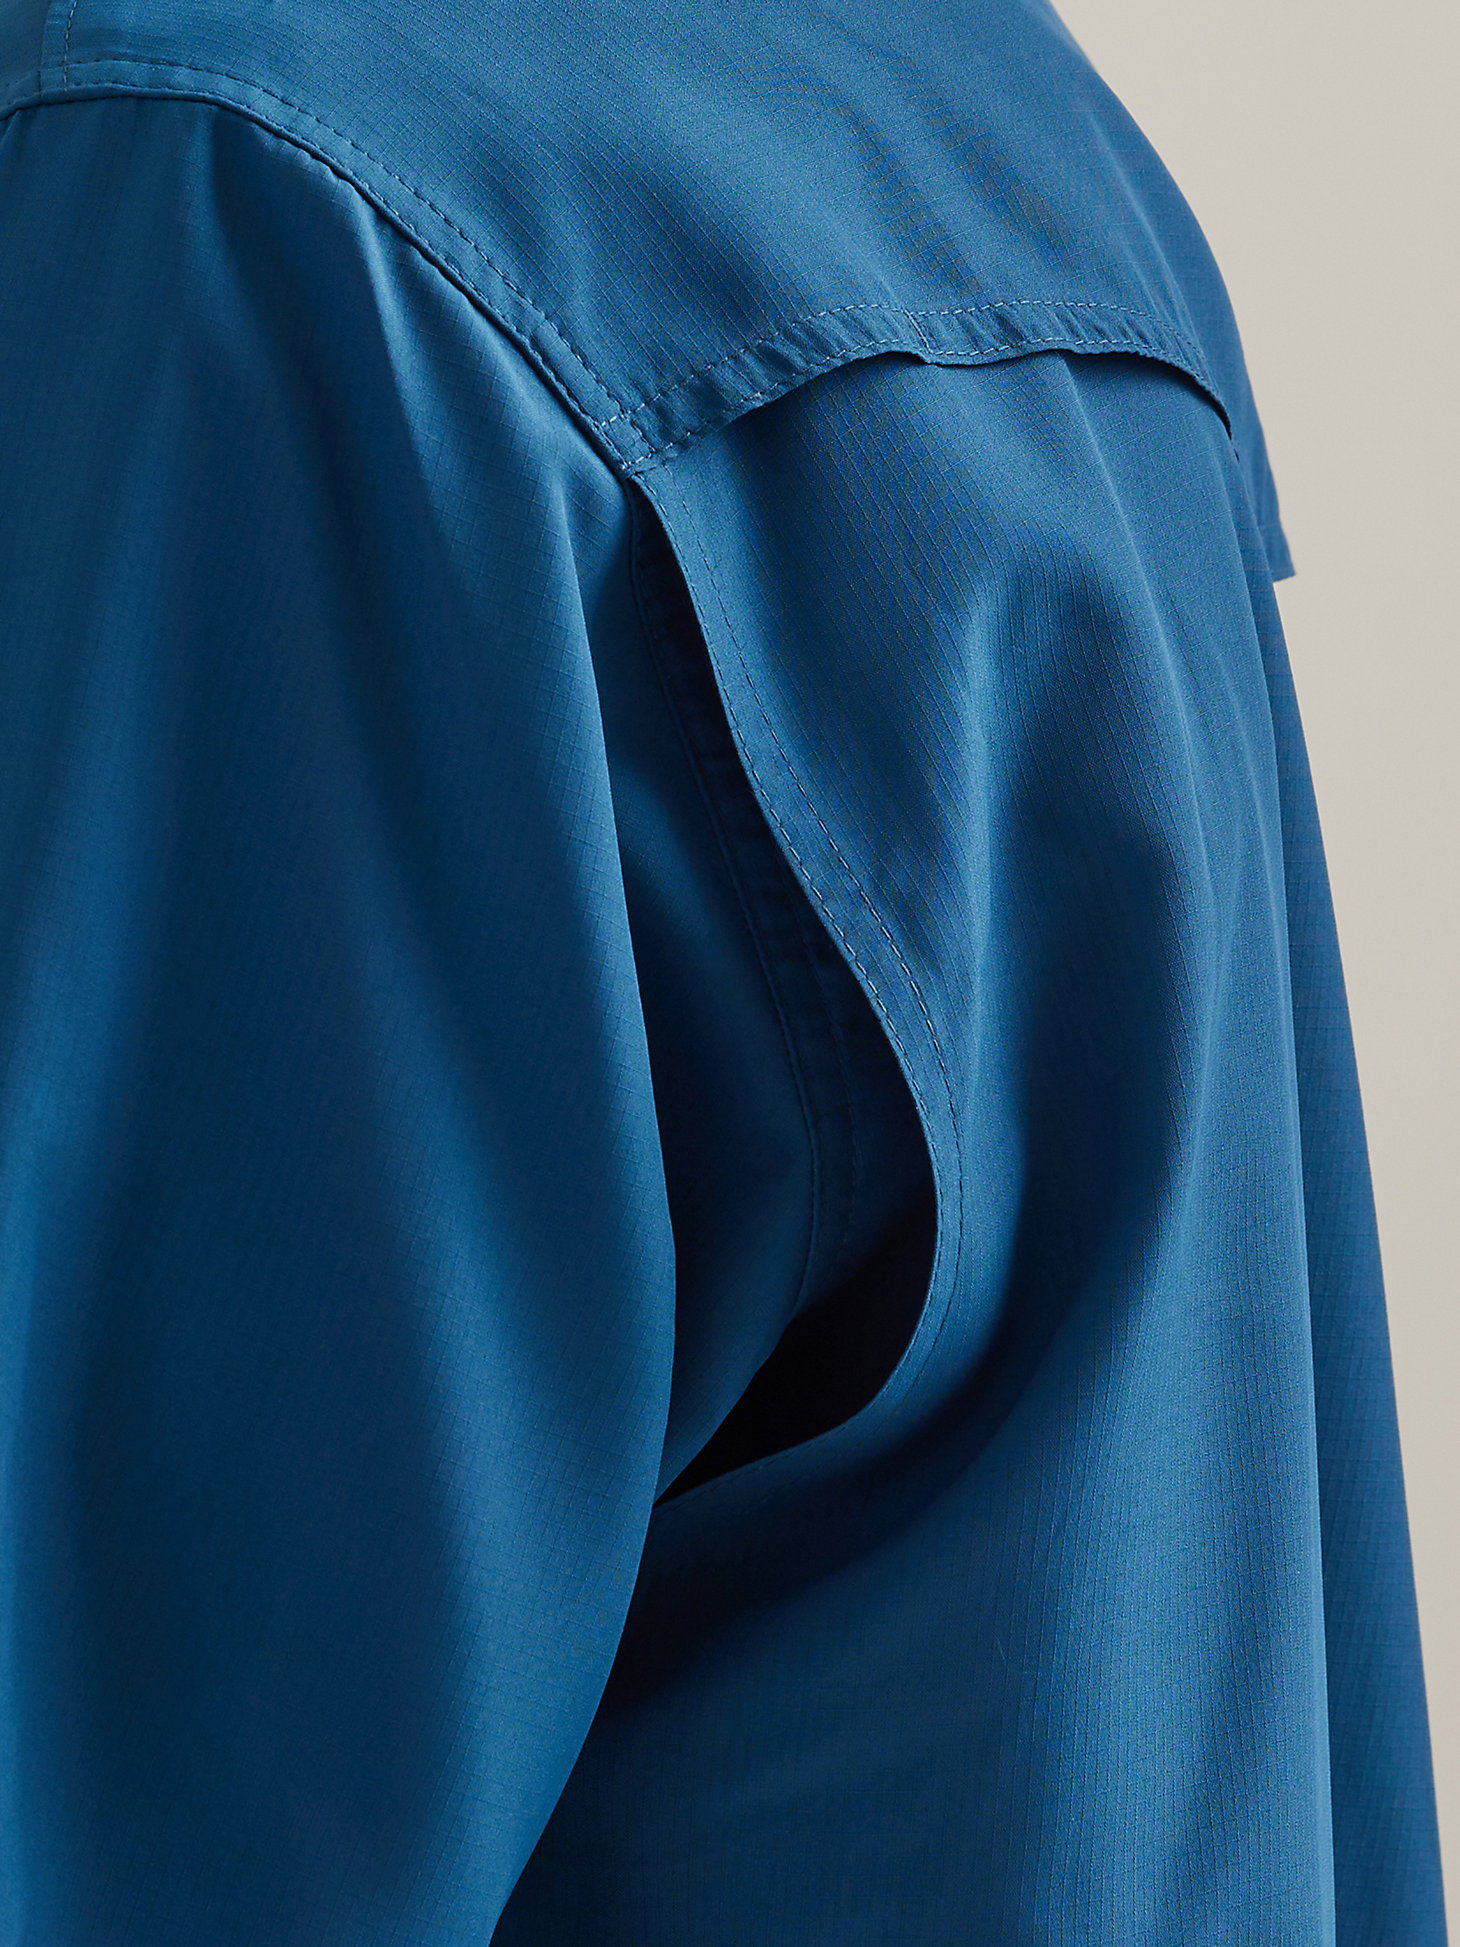 Men's Wrangler Performance Snap Short Sleeve Solid Shirt in Blue